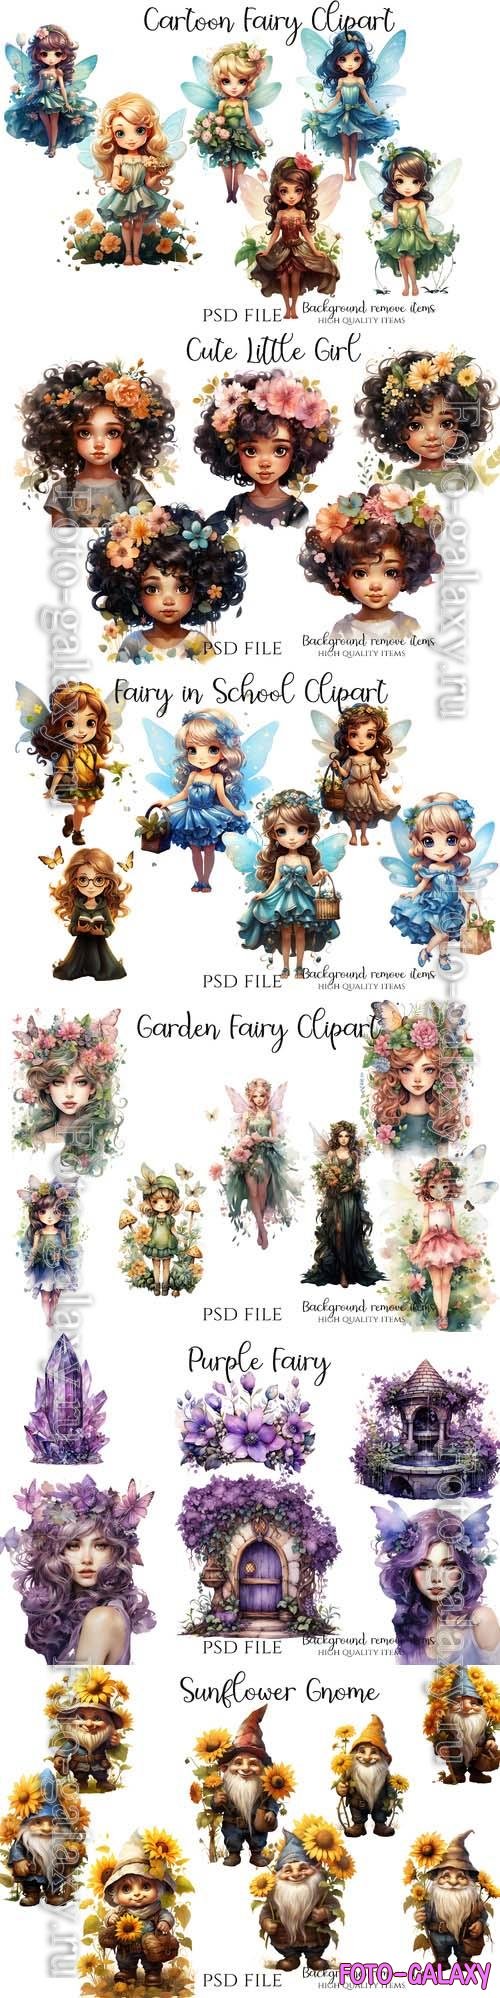 Cartoon fairy, cute little girl character, purple graphic fairy, sunflower gnome, garden fairy - PSD illustration cliparts set